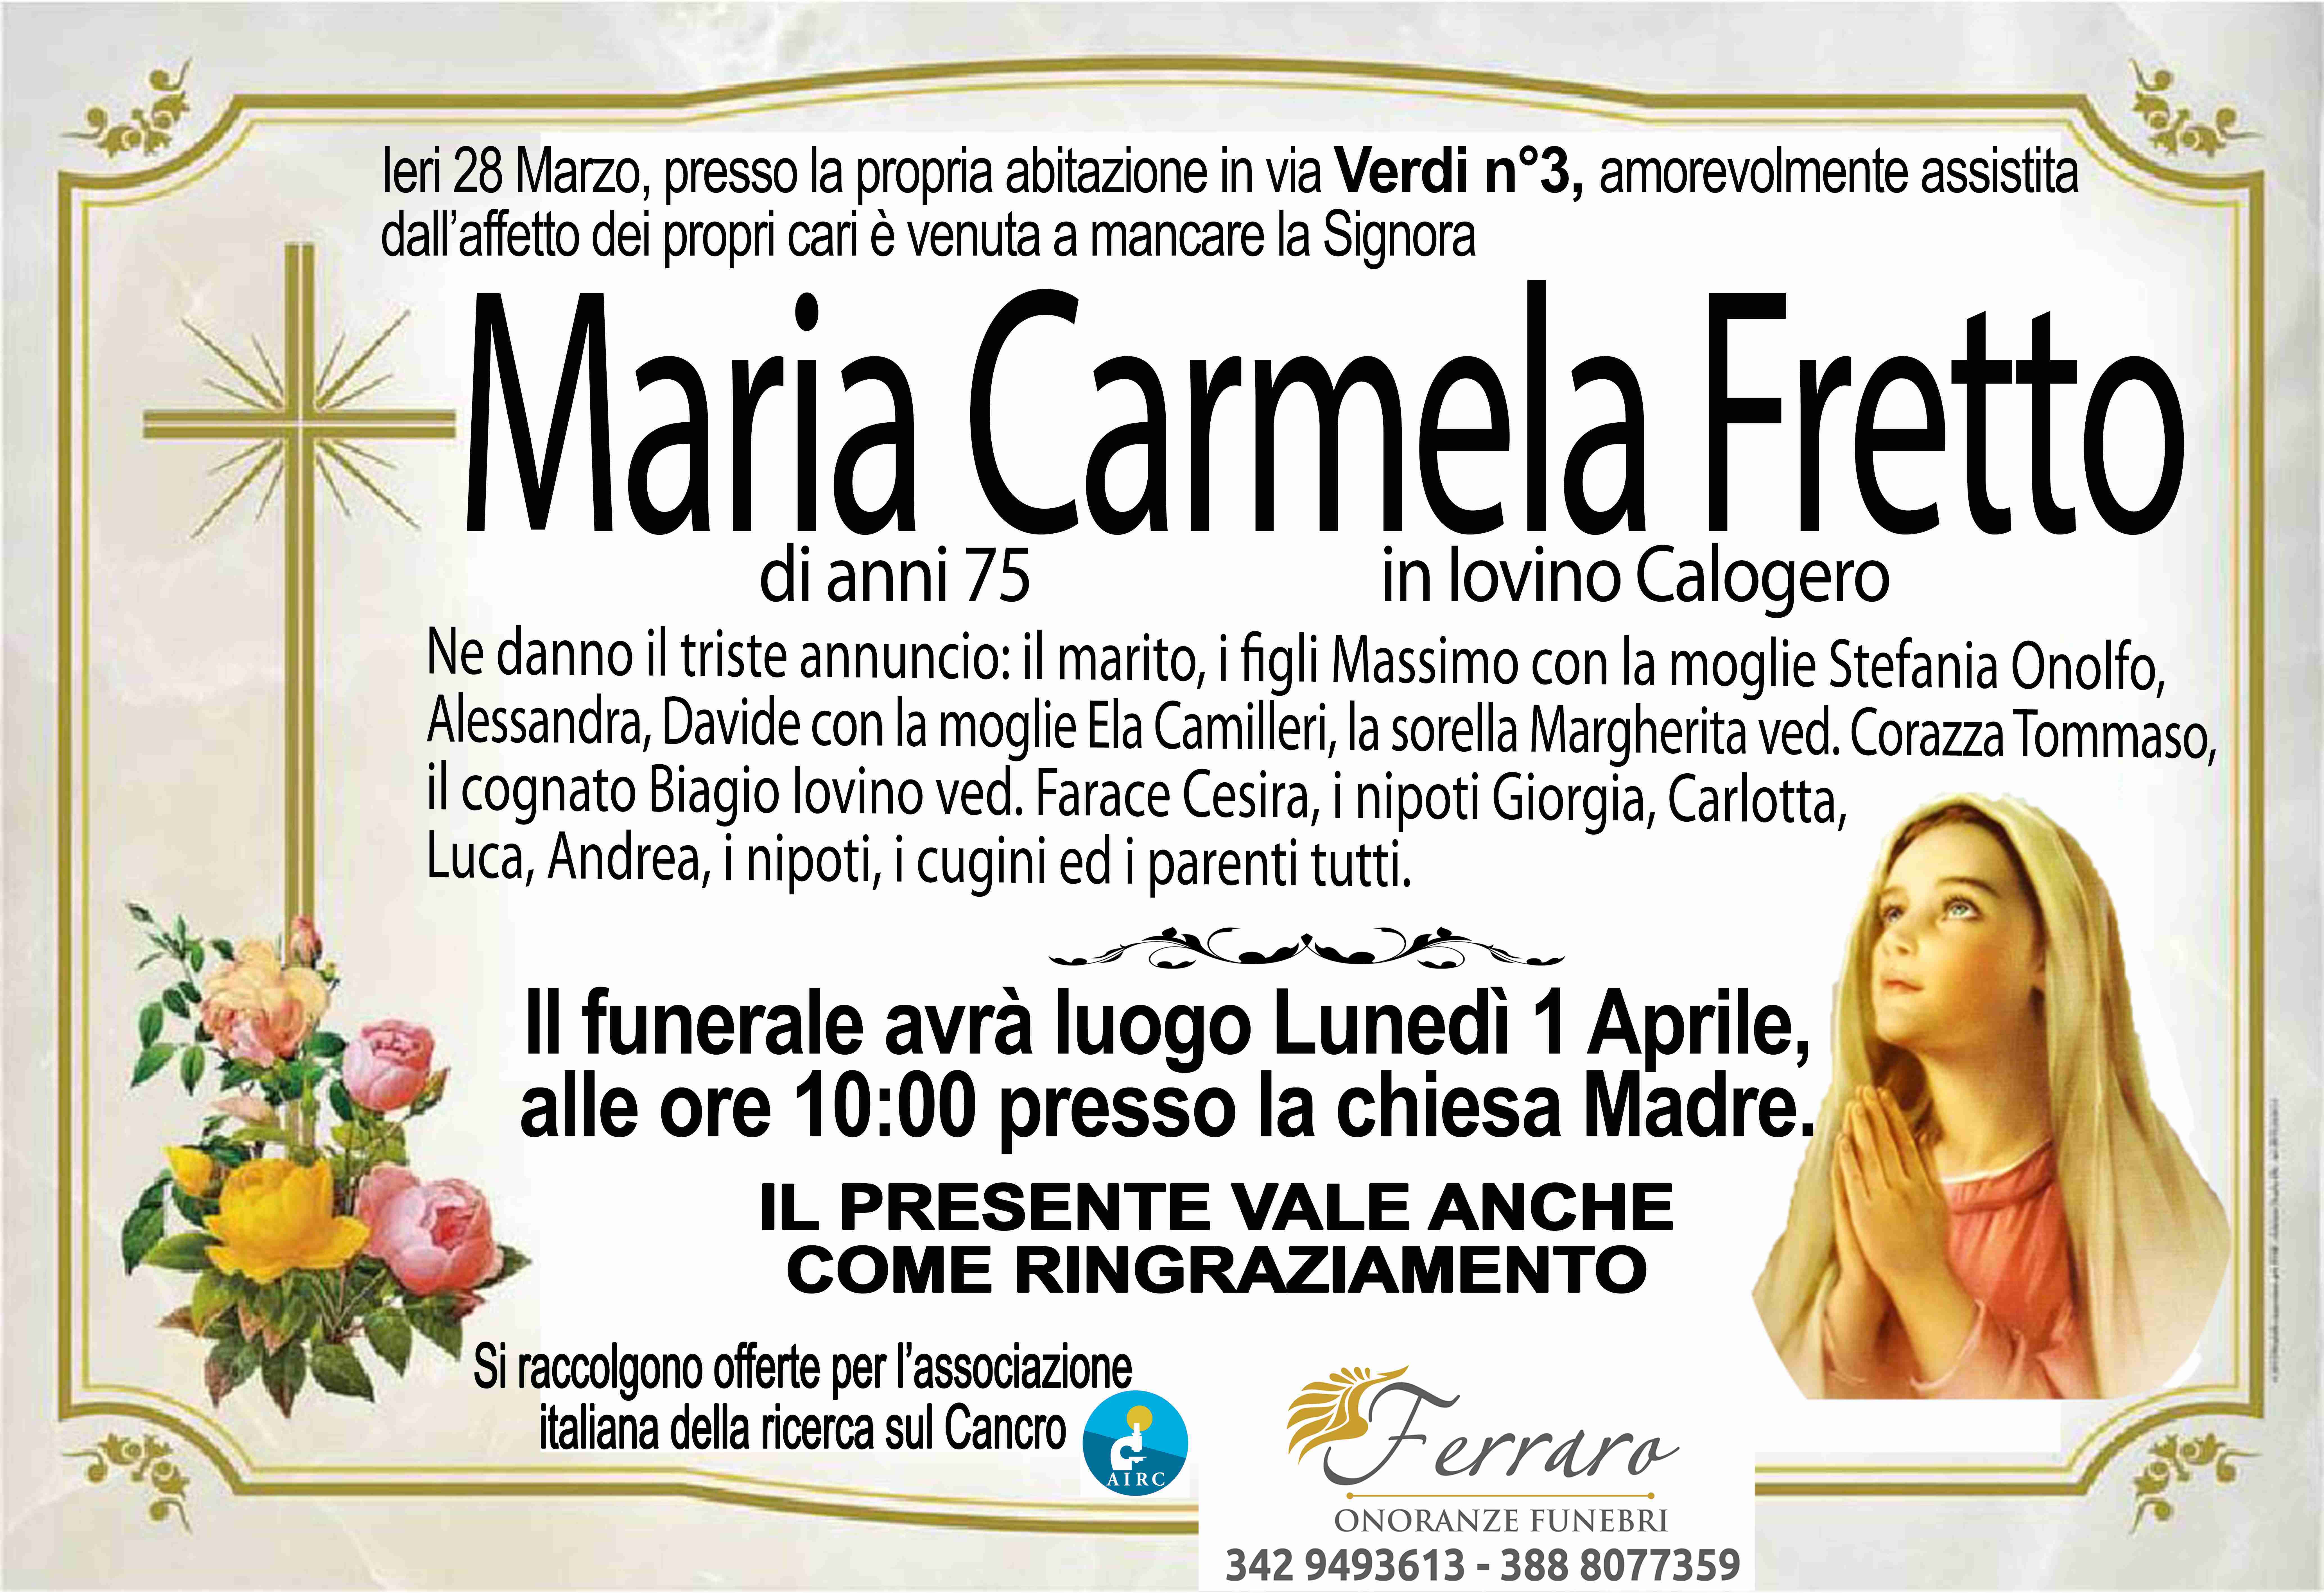 Maria Carmela Fretto